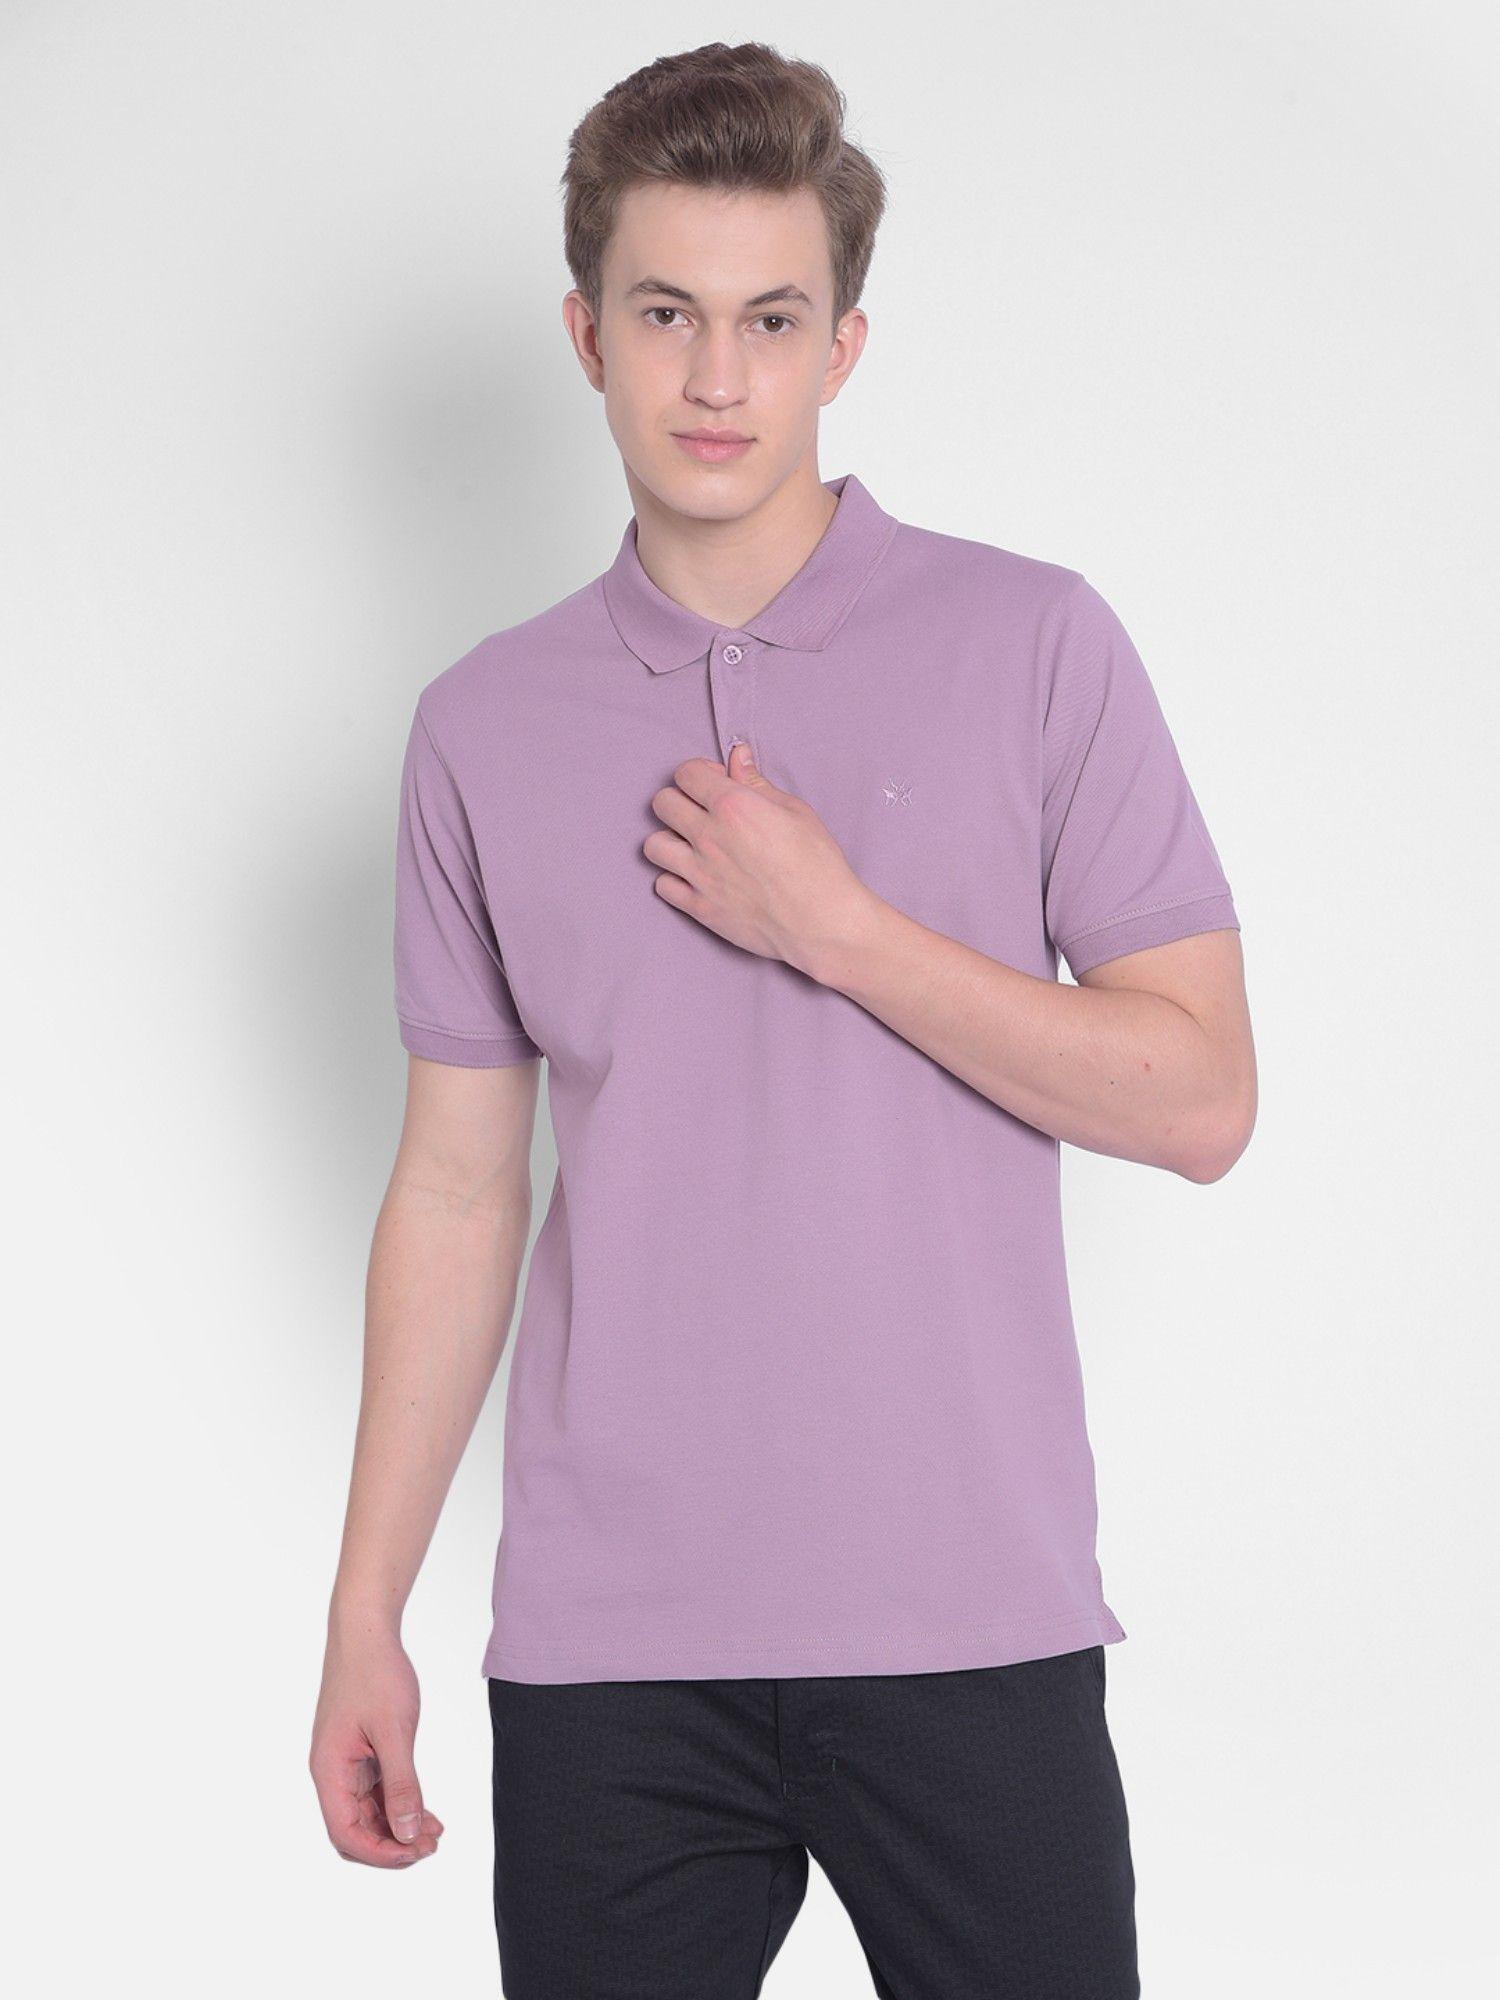 men's purple polo t-shirt